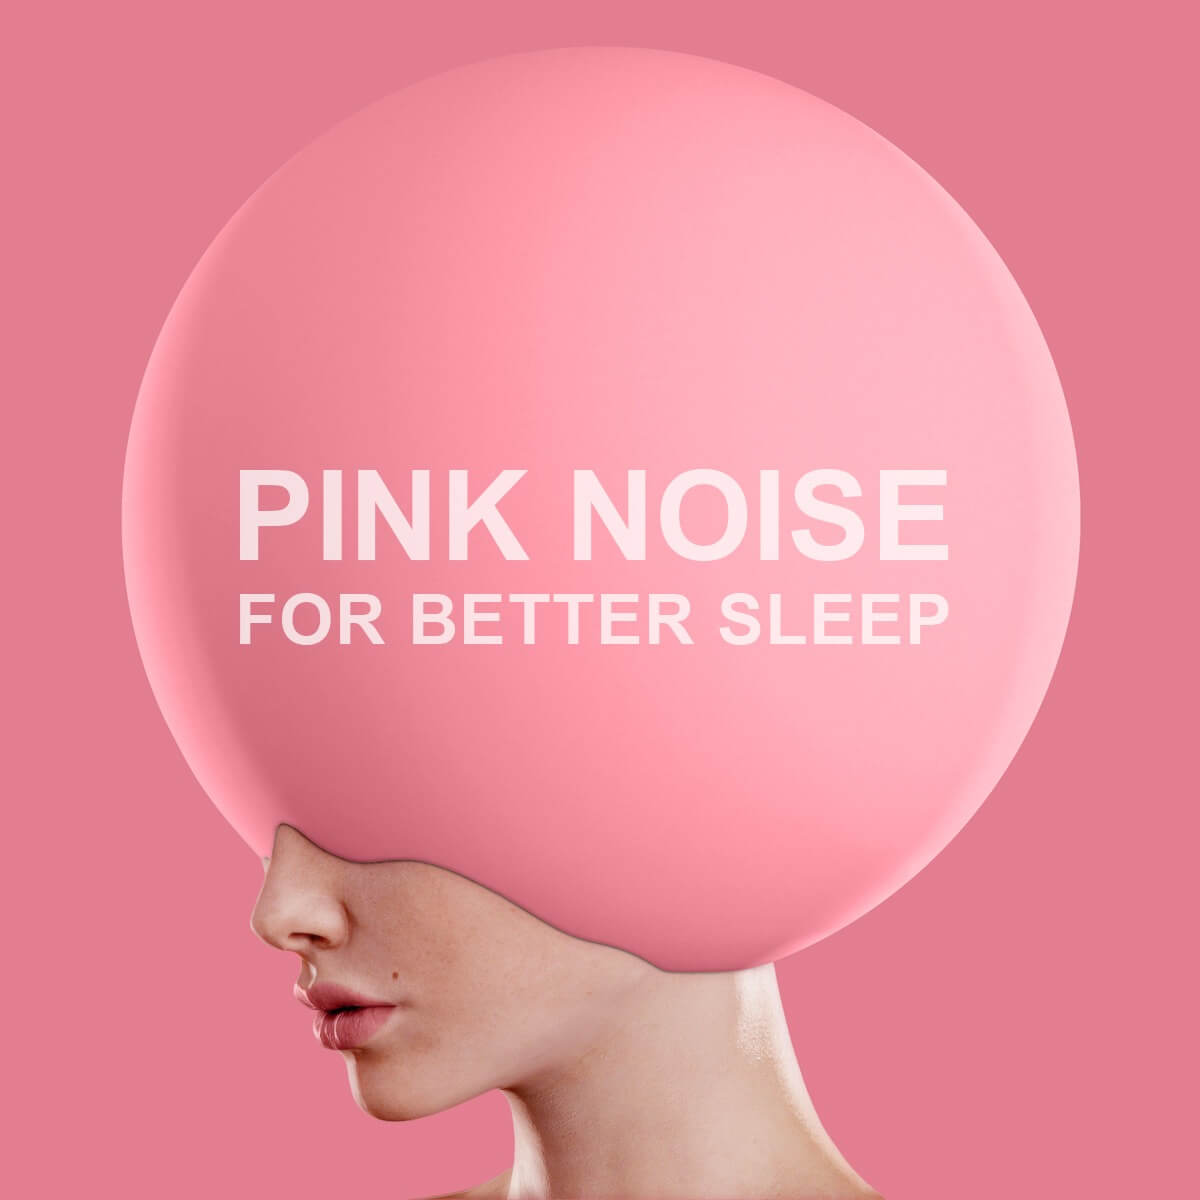 Pink noise for better sleep